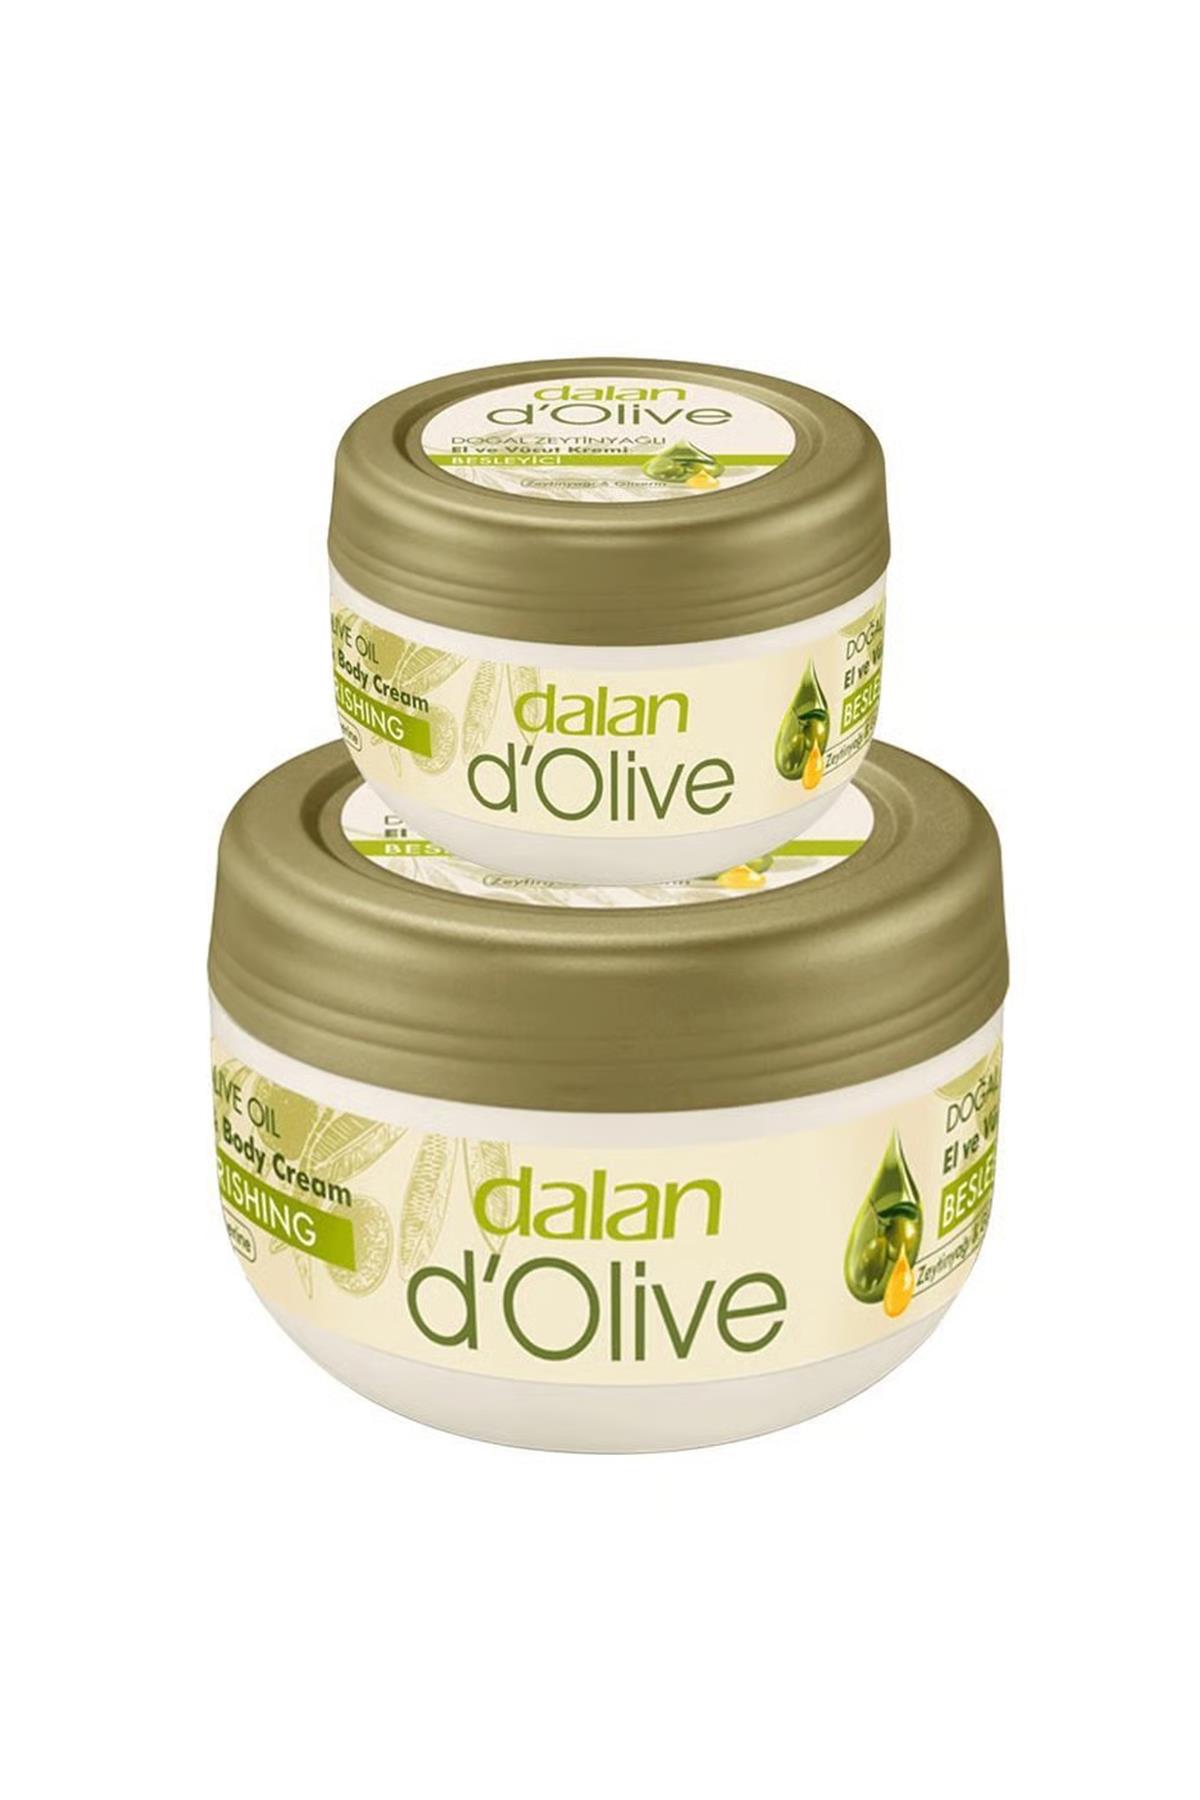 dalan-d-olive-dogal-zeytinyagli-krem-300-ml-150-ml-hediye-8940-1.jpg